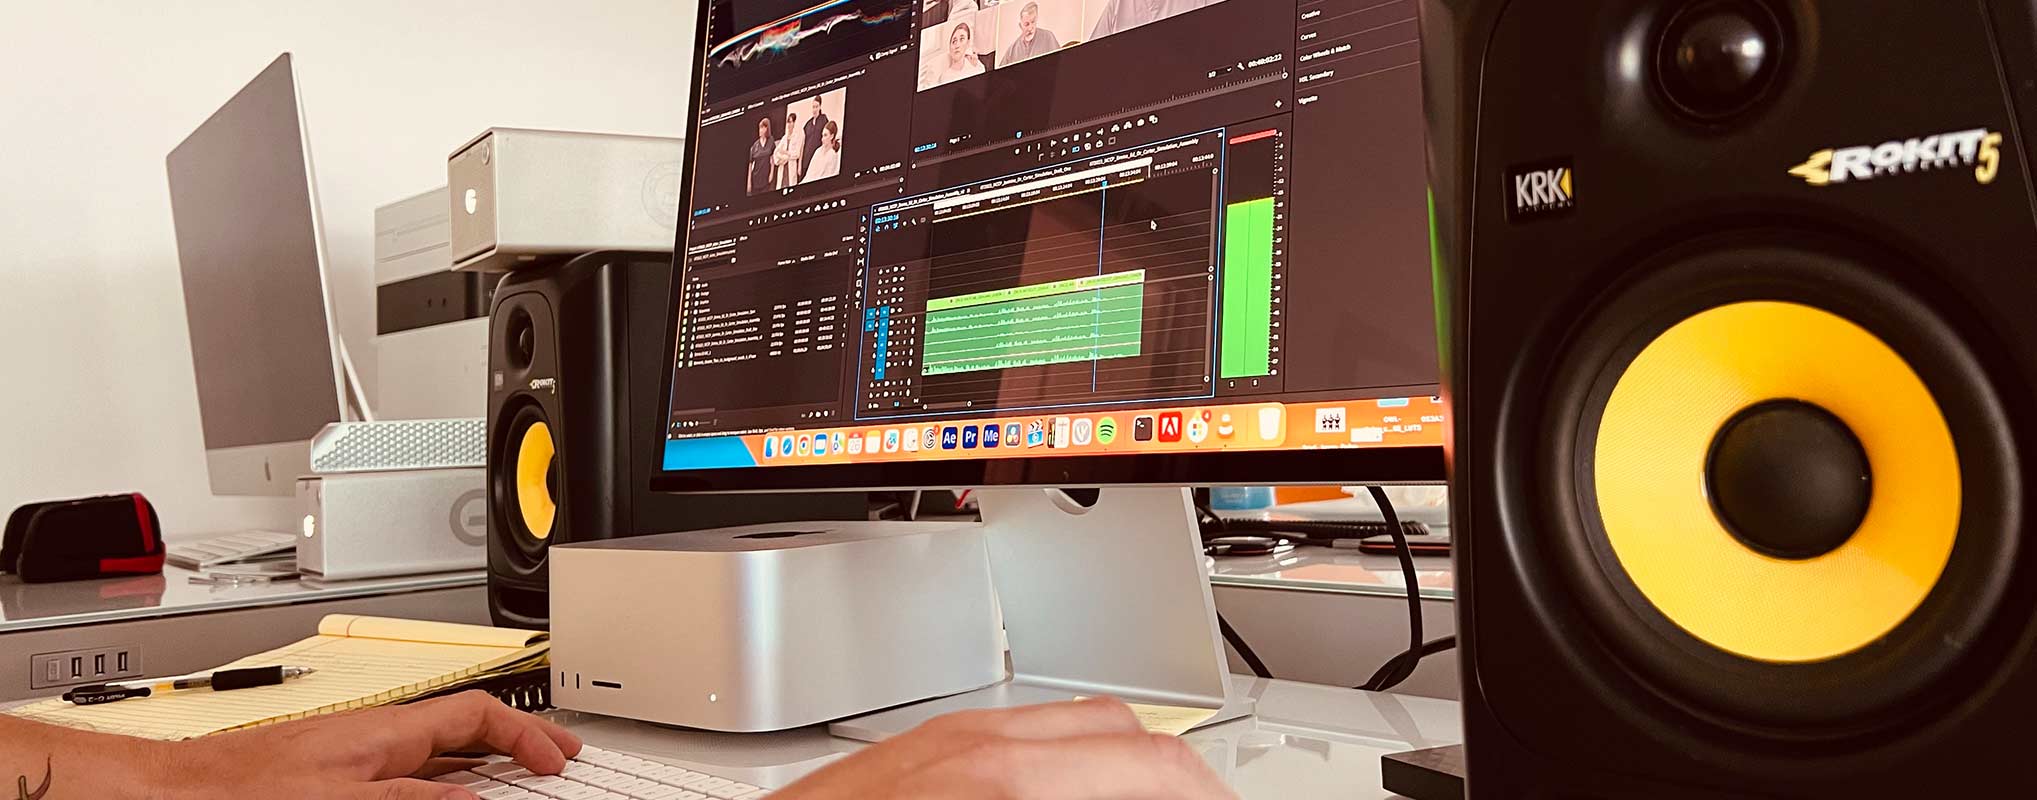 NJ video editing commences on an apple mac studio workstation